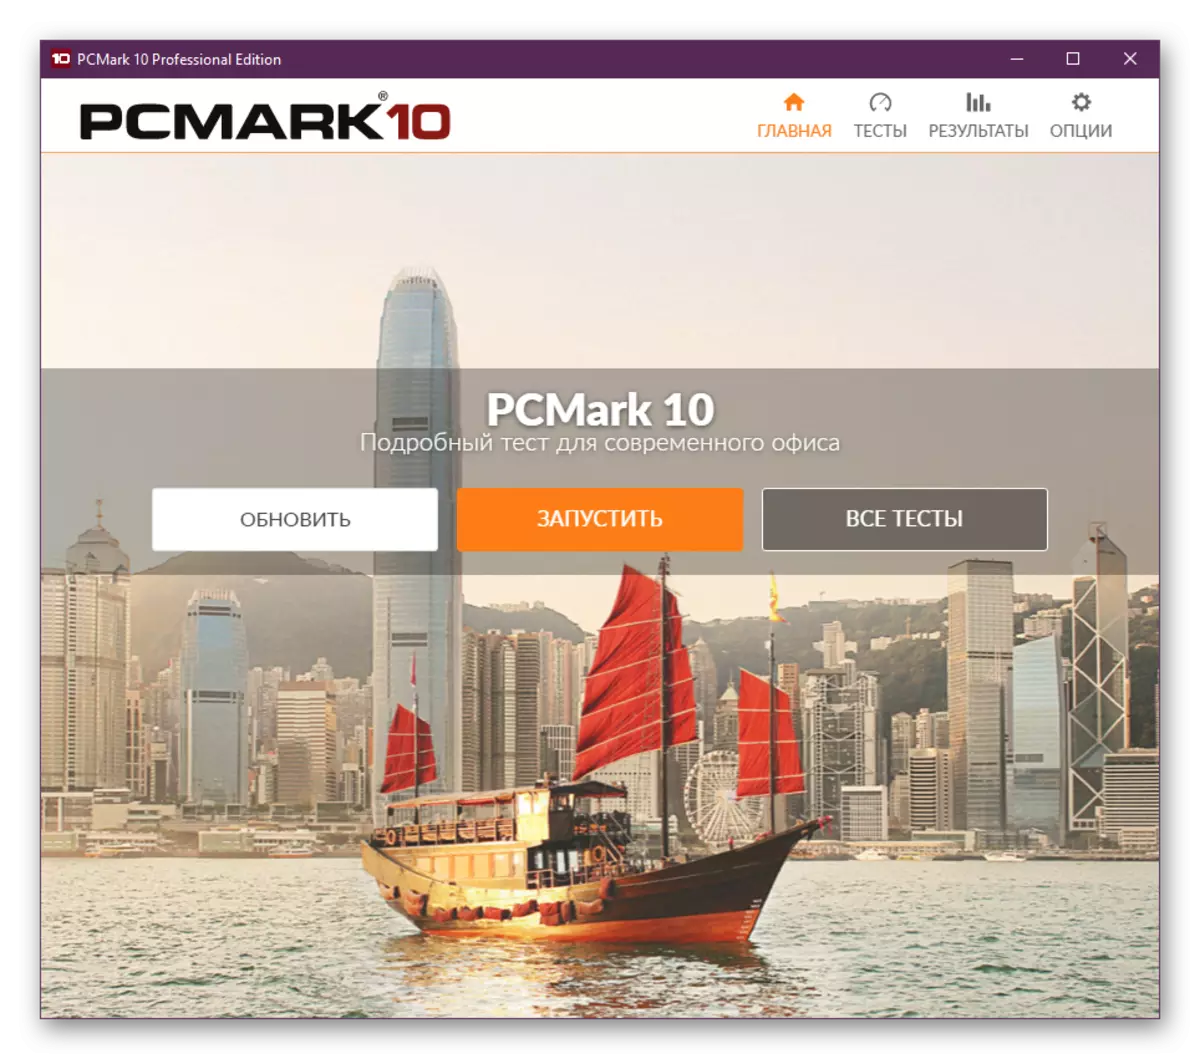 Glavno okno v programu PCMark